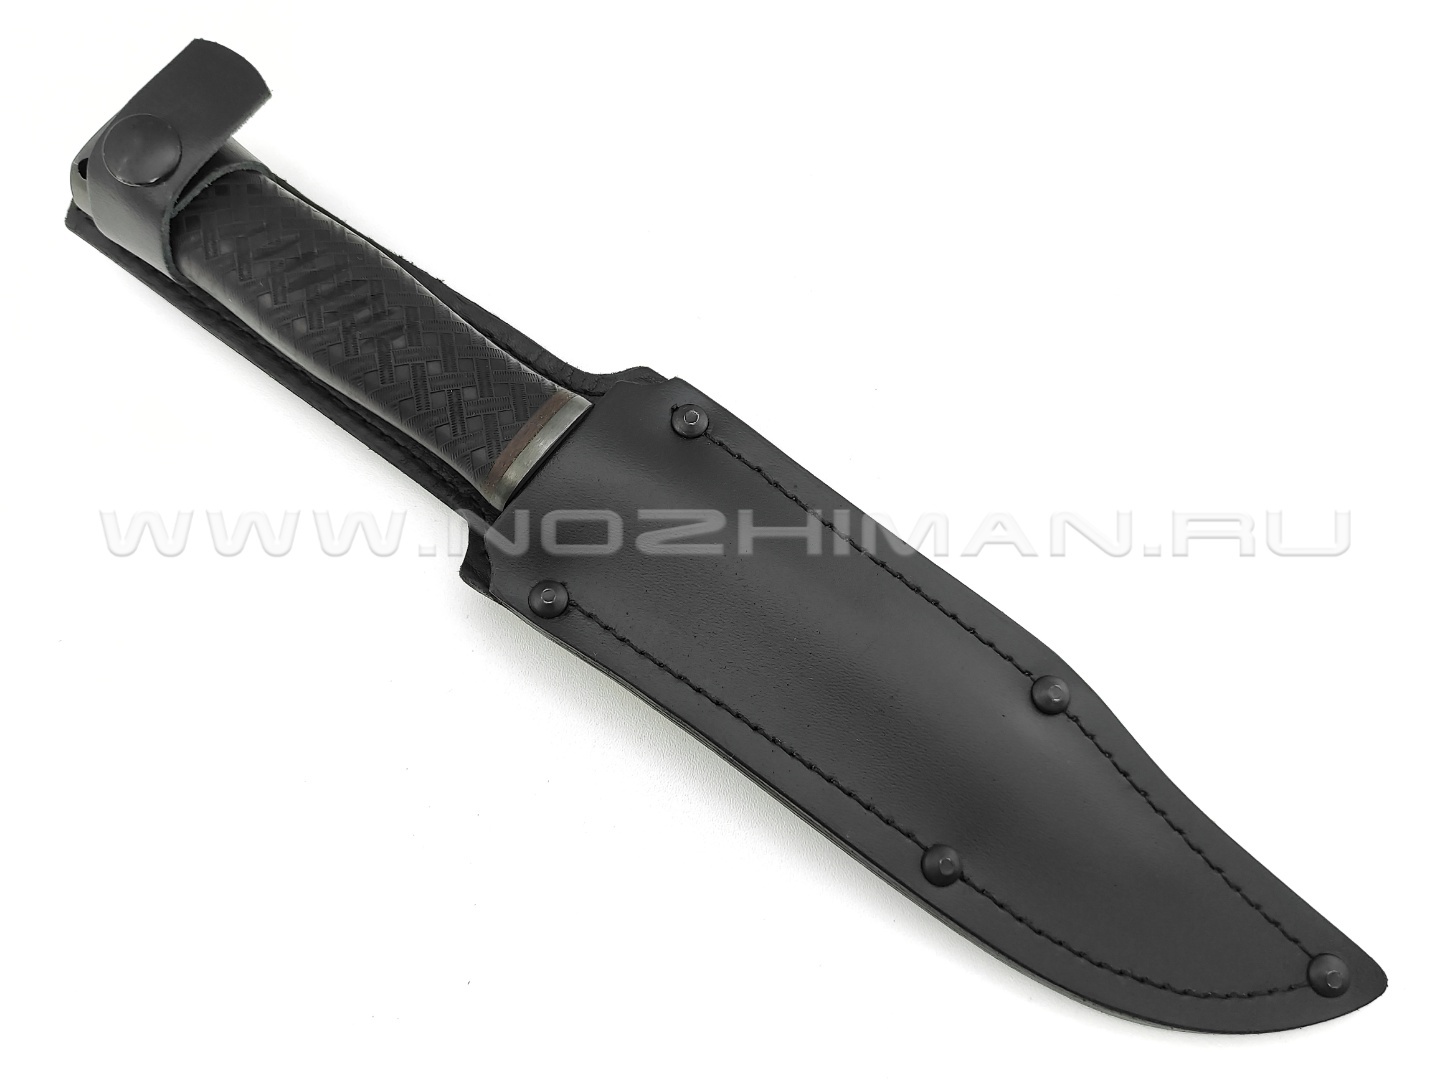 Нож "Комбат-2" сталь 65Г, рукоять резина (Титов & Солдатова)